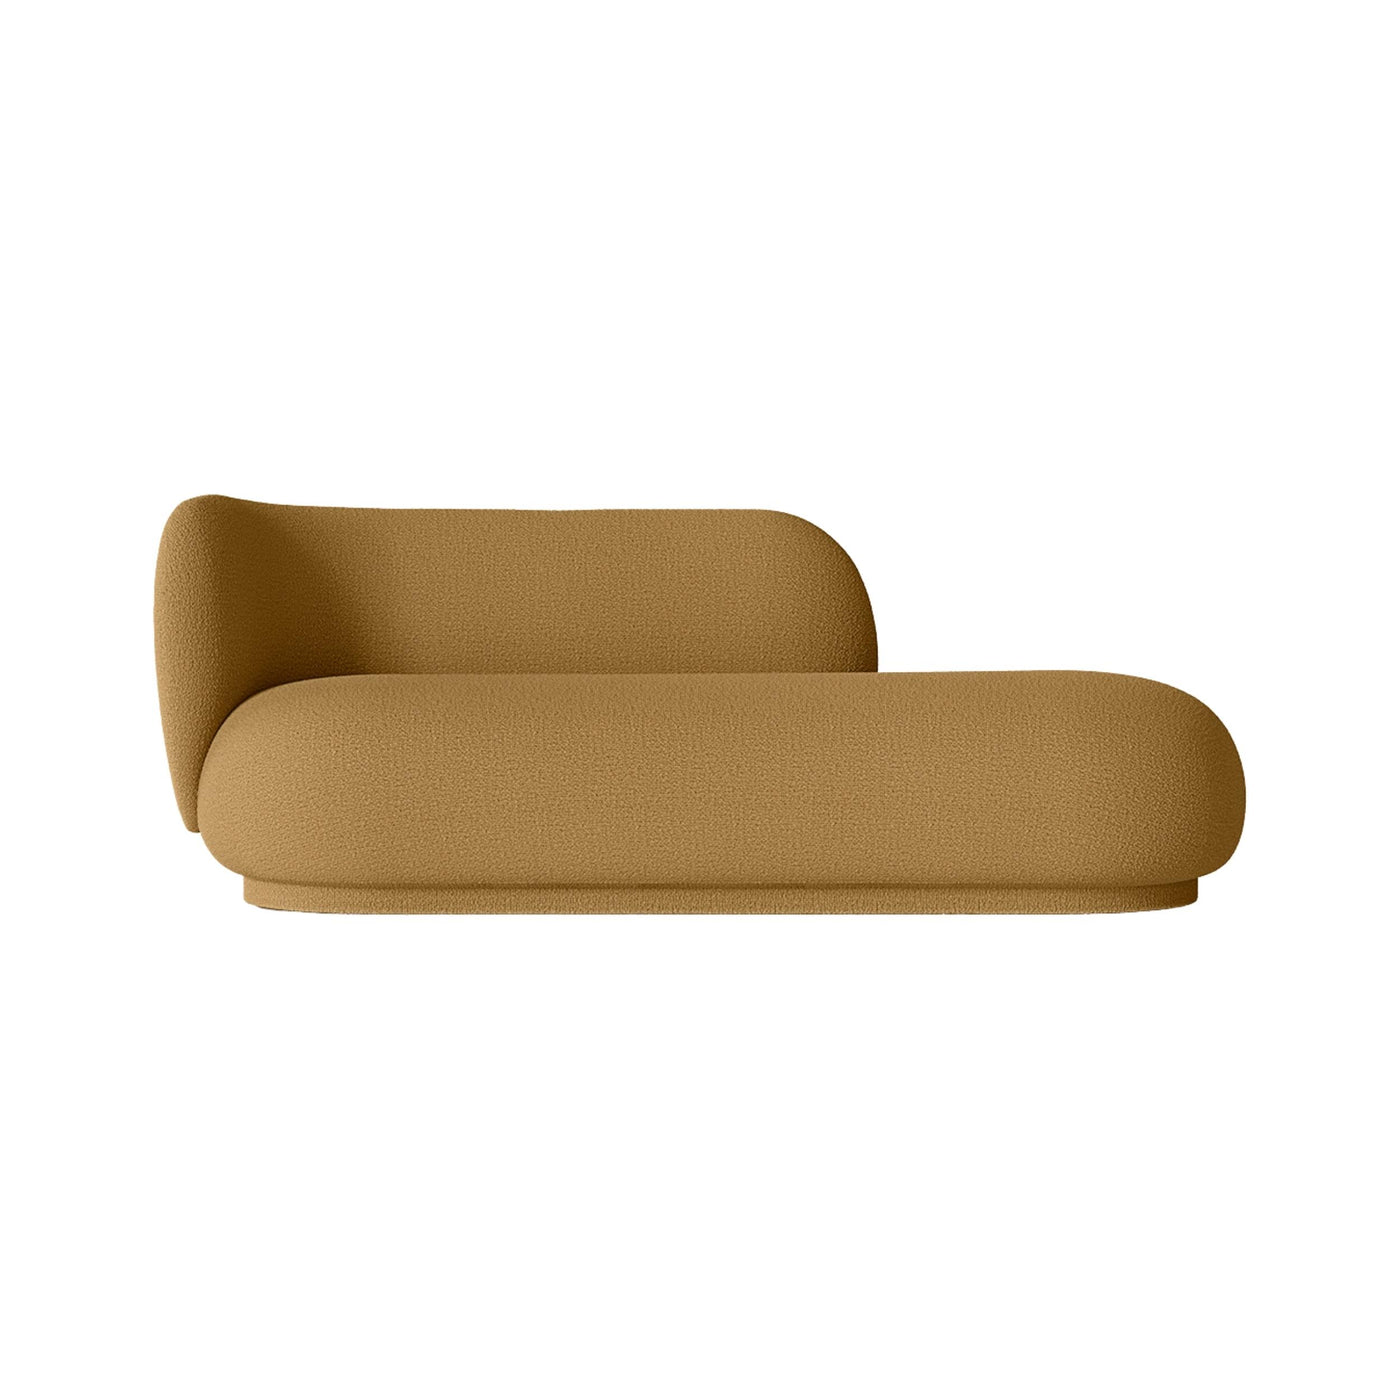 sugar kelp wool bouclé | Ferm Living sofa swatch | someday designs